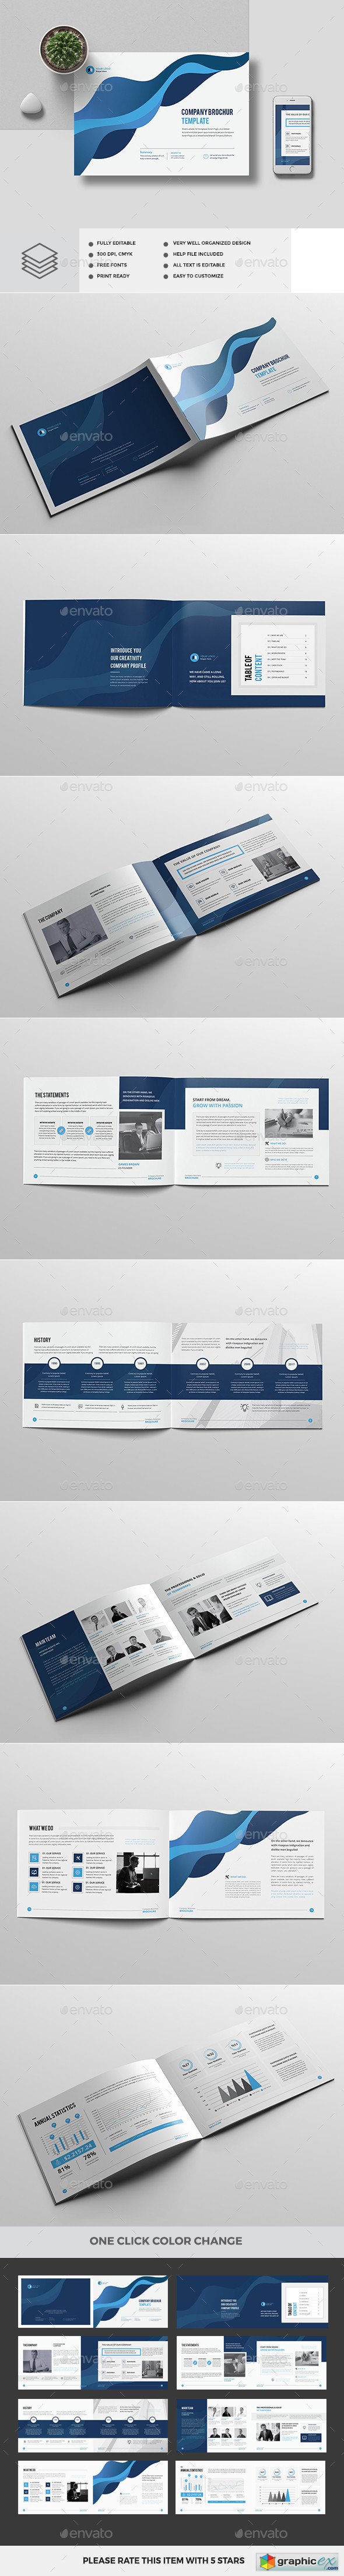 A4 Landscape Company Profile 16 Pages V2